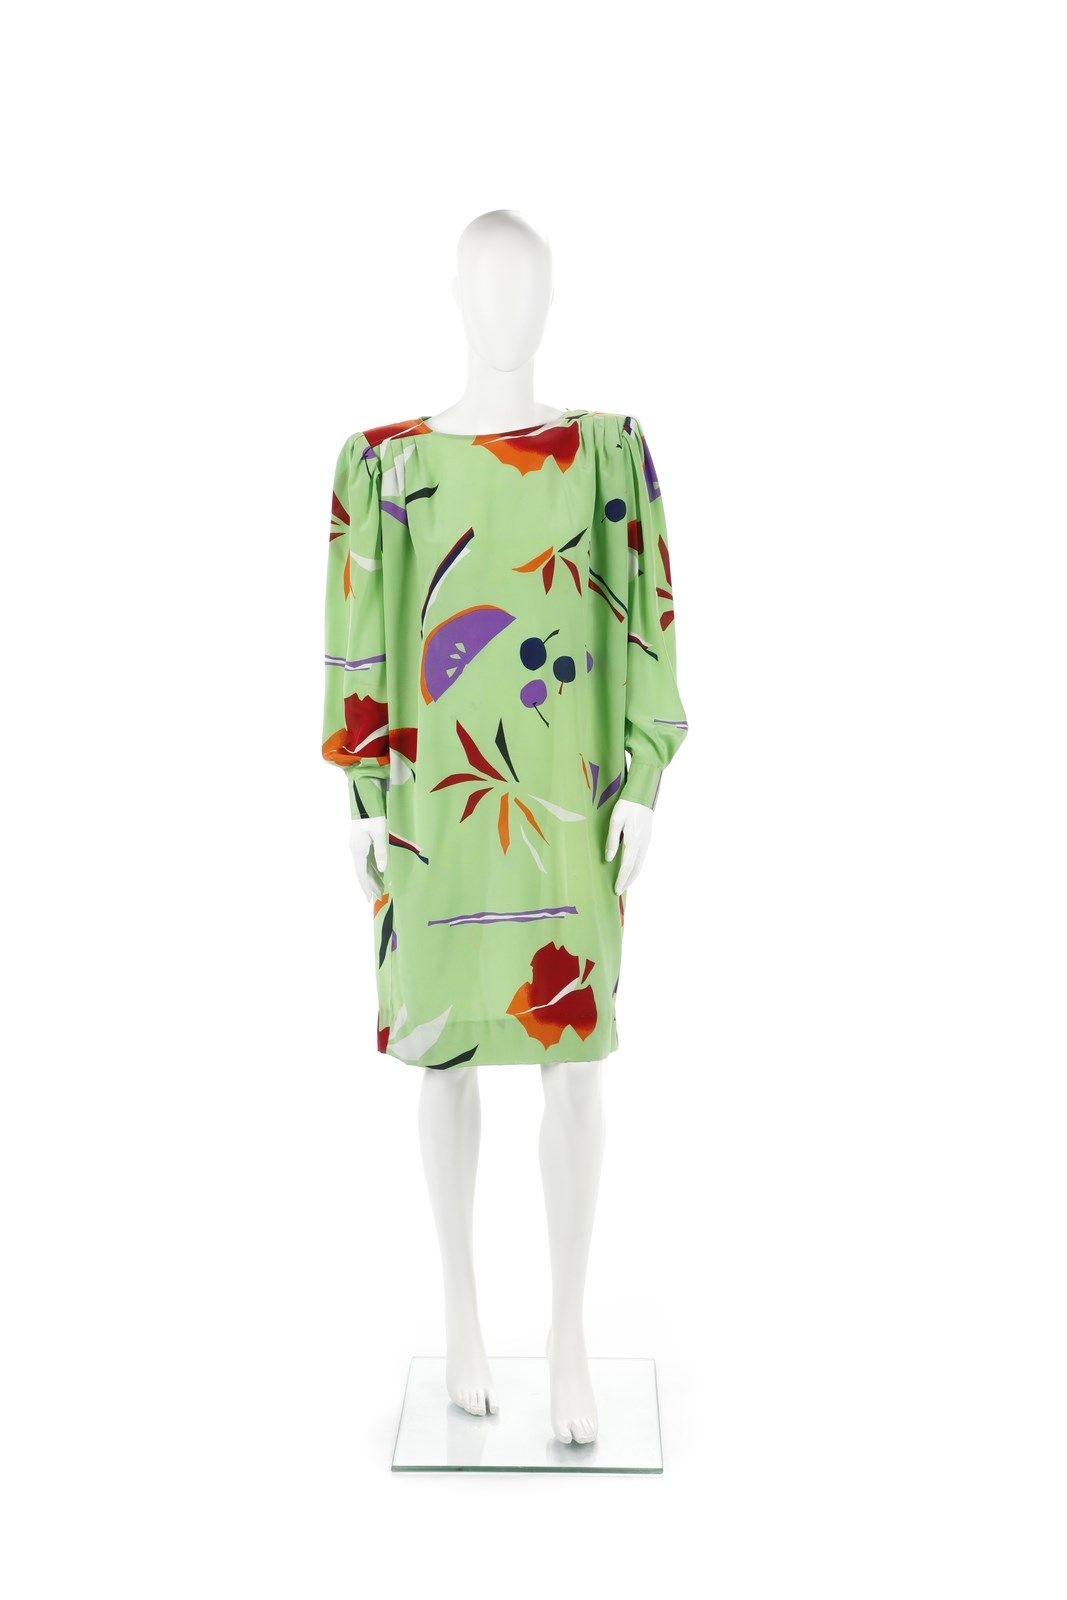 EMANUEL UNGARO Only Woman Line. Silk dress with geometric pattern on an acid gre&hellip;